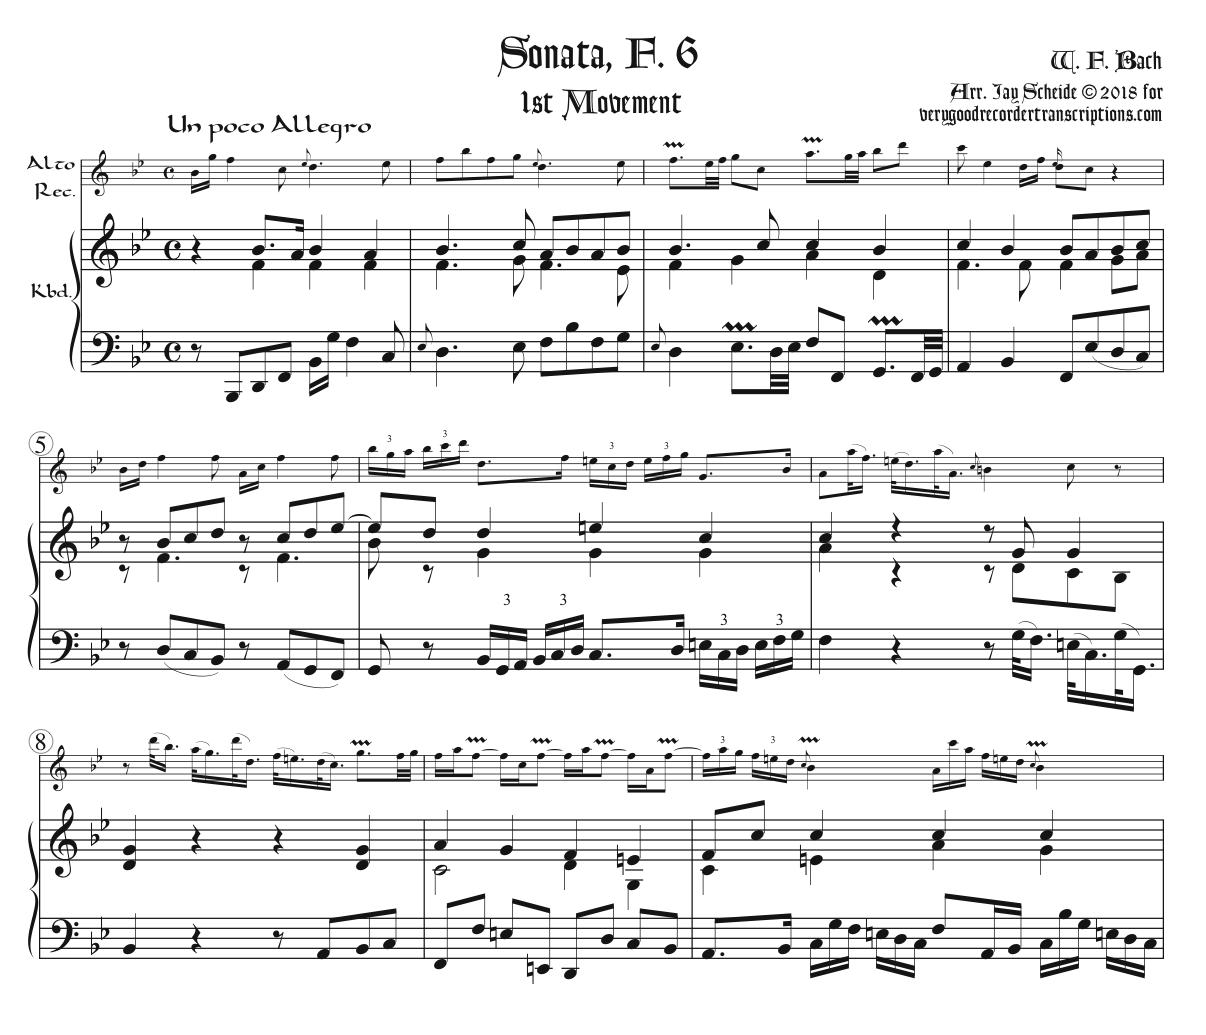 1st Movement from Sonata, F. 6